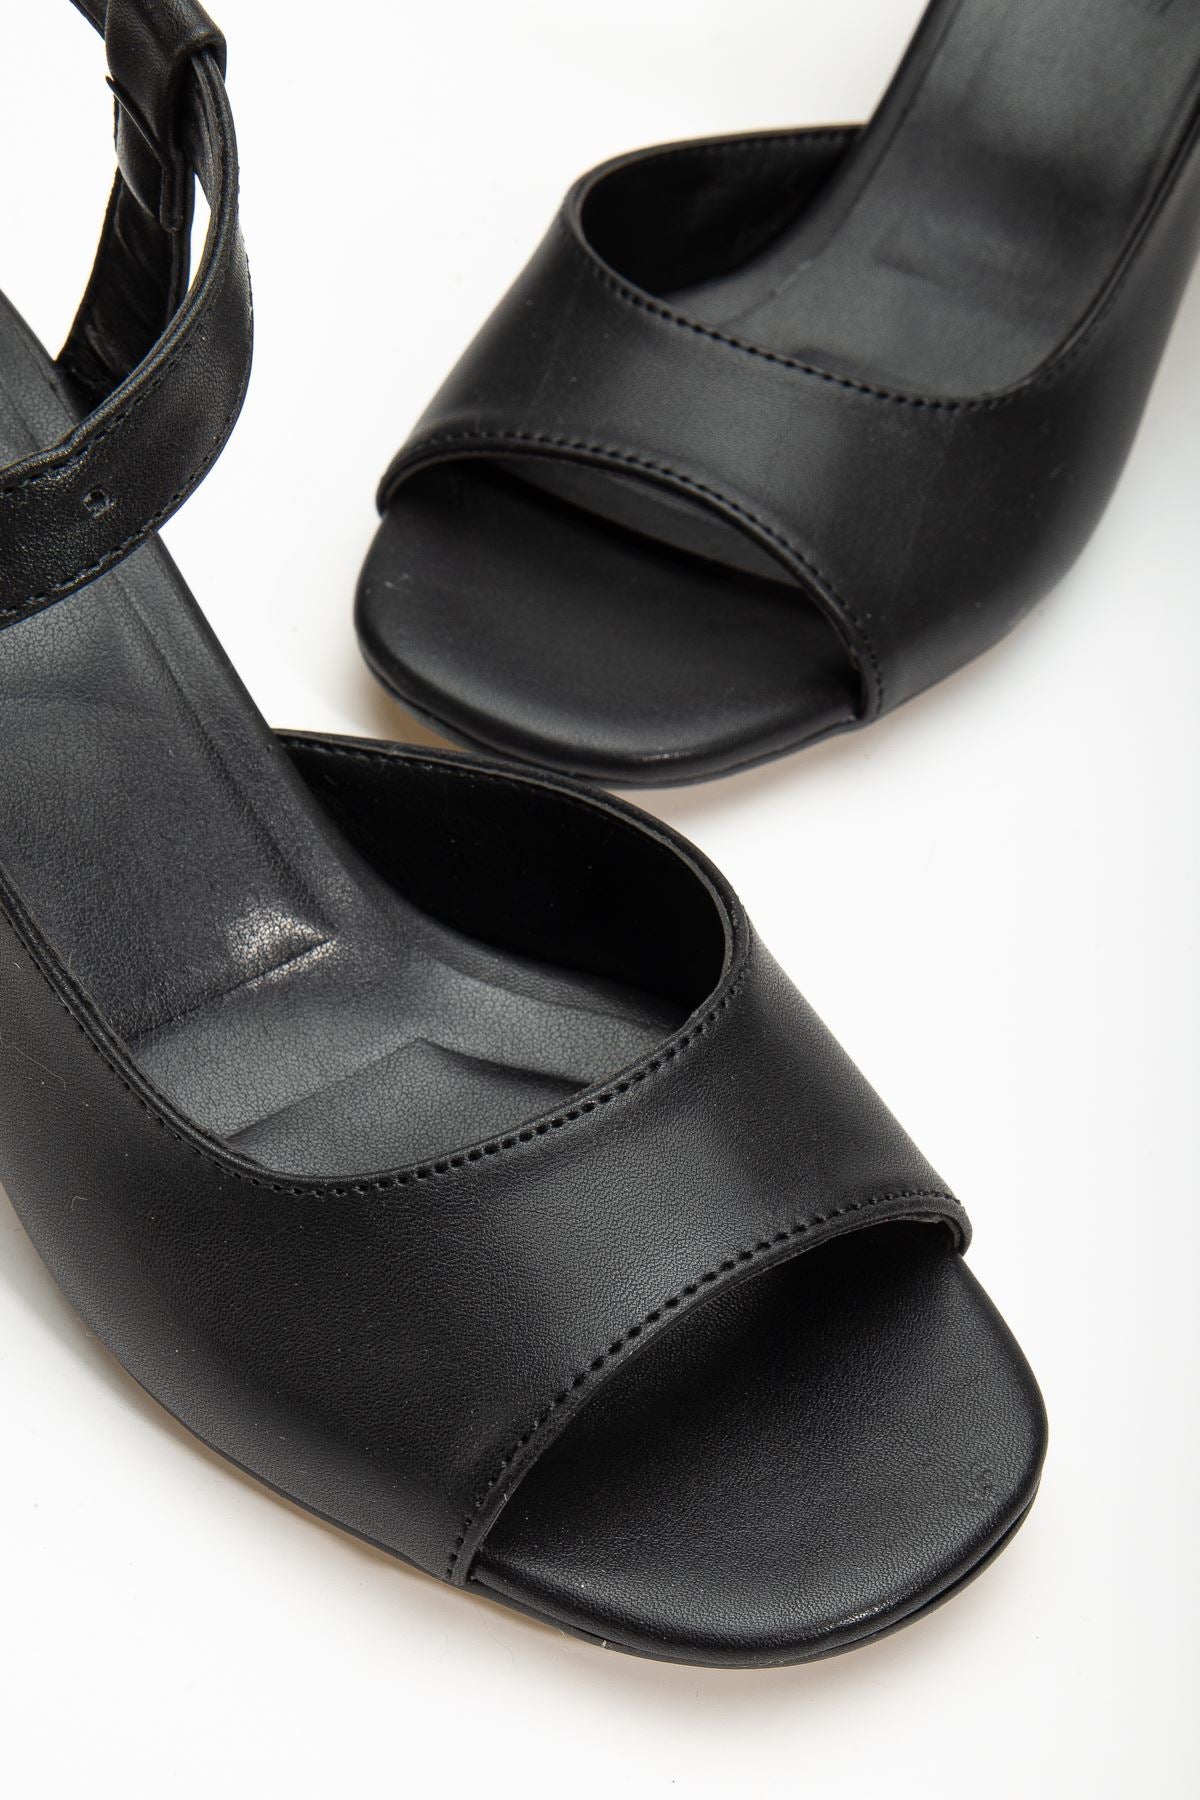 Keri Heeled Black Skin Blunt Toe Women's Shoes - STREETMODE™